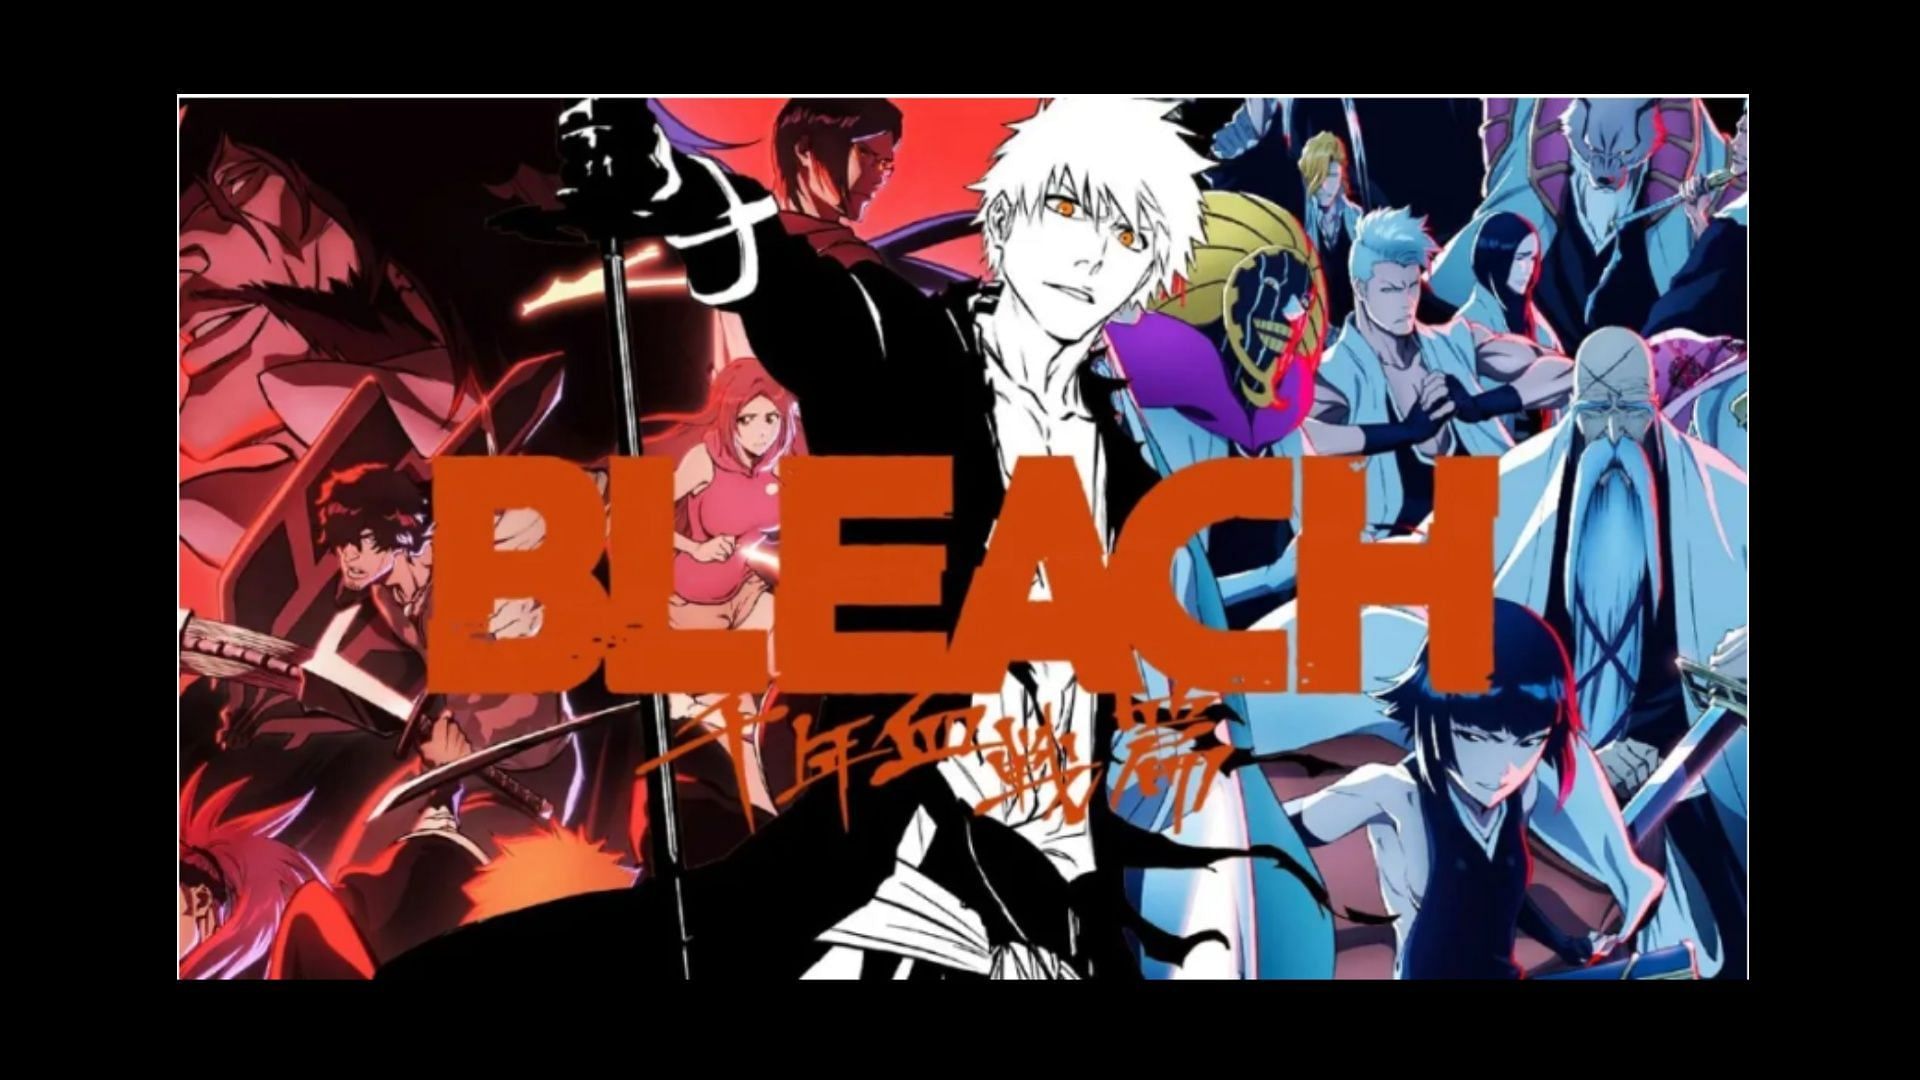 Bleach Animated World - 🔥 Bleach TYBW Season/Part/Cour 2 is coming back in  July 2023 🔥 Stay tune for actual date of July! 👀 #BLEACH #BLEACH2023  #TiteKubo #TheBladeIsMe #HollowIchigo #IchigoKurosaki #KurosakiIchigo  #Zangetsu #